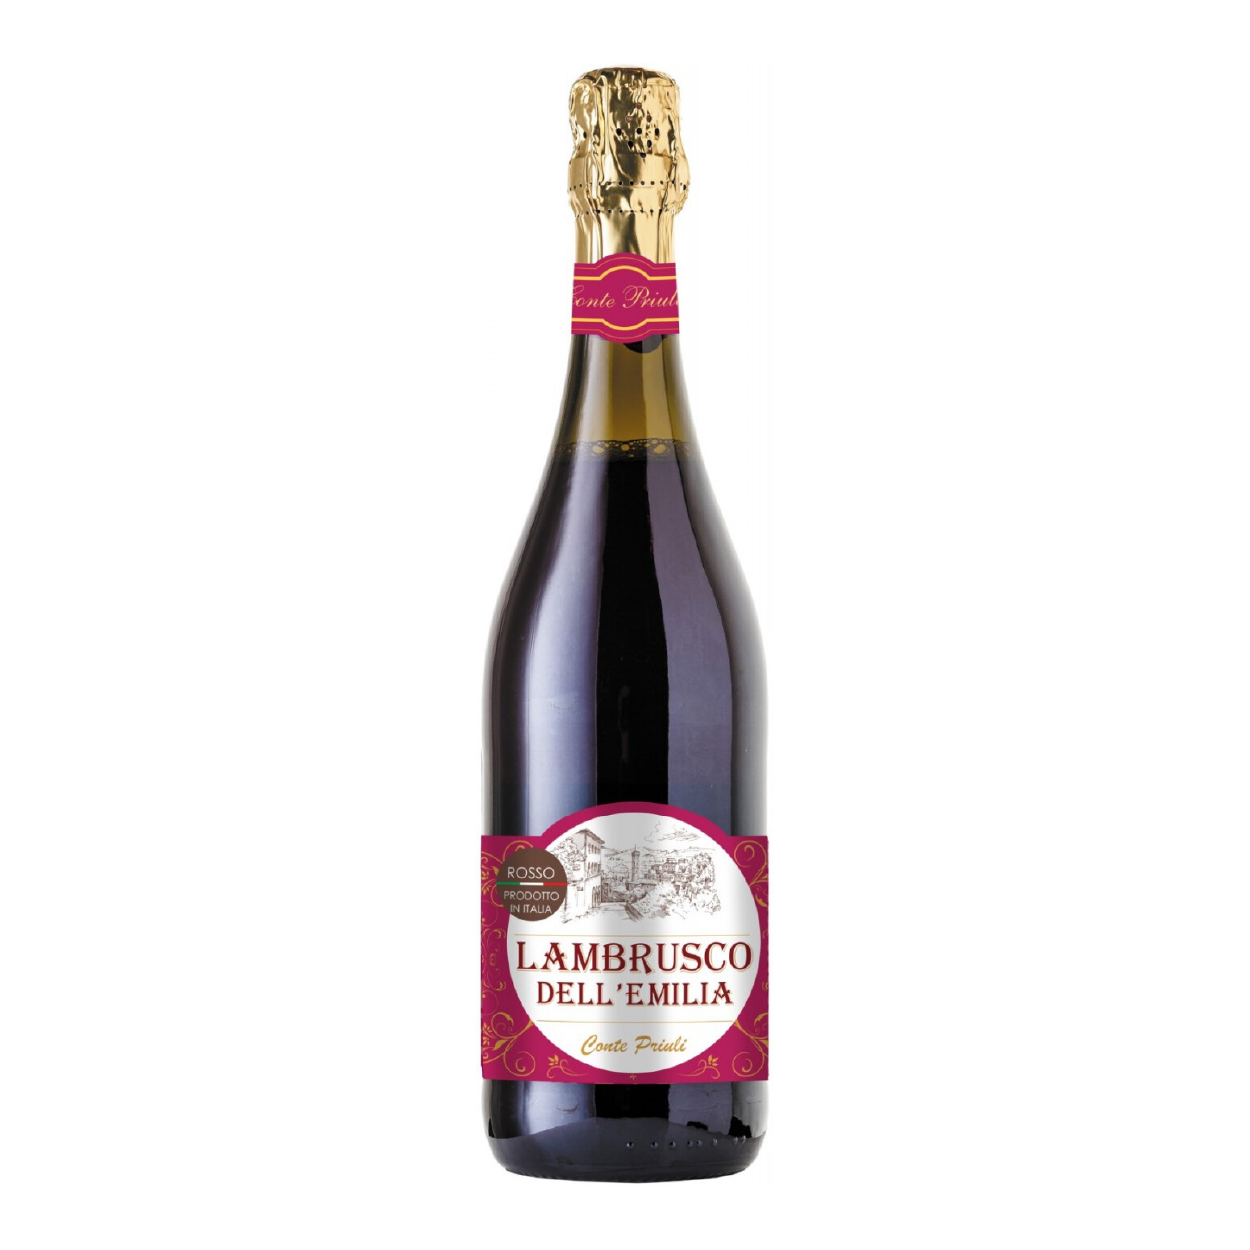 Lambrusco dell emilia цена. Вино Конте Приули Ламбруско. Вино Lambrusco dell Emilia Конте Приули. Ламбруско Россо красное п сл.